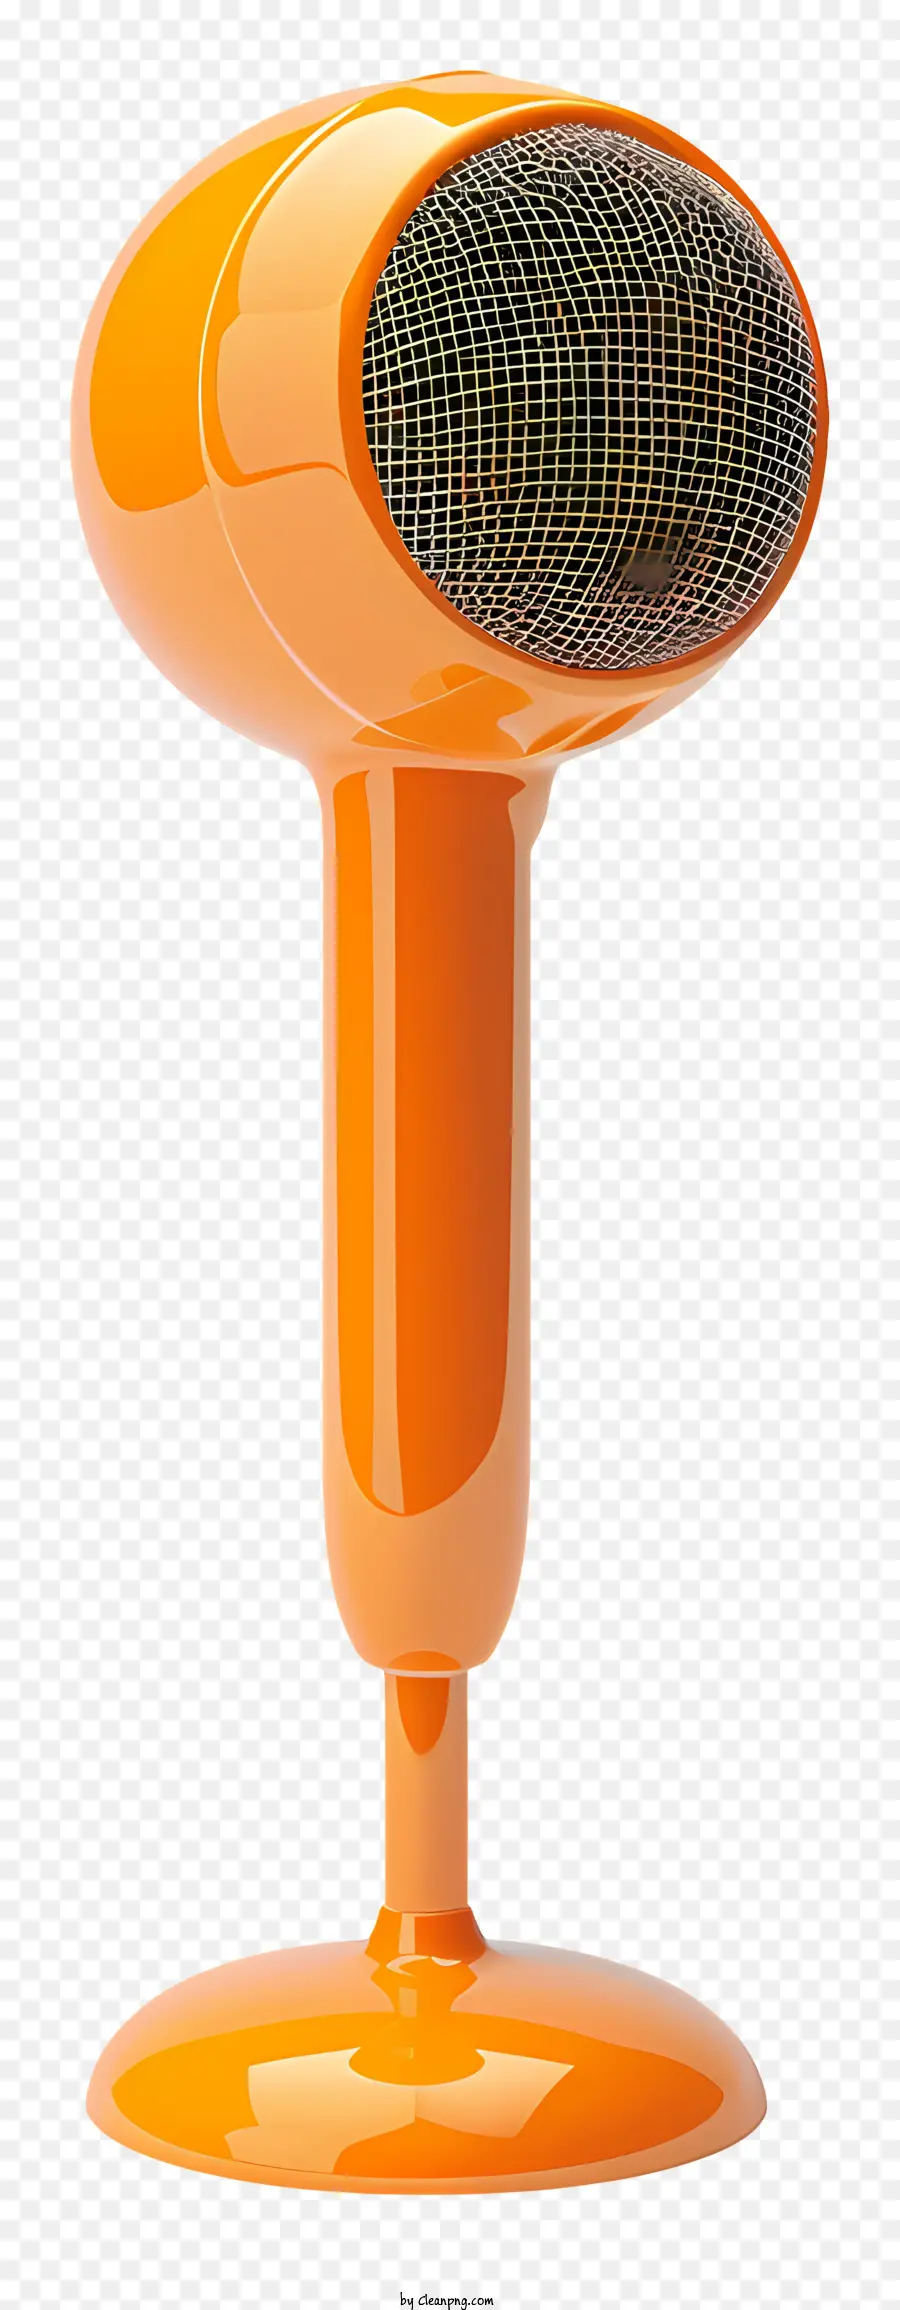 speech orange heat lamp black base mounted on a stand cylindrical heat lamp